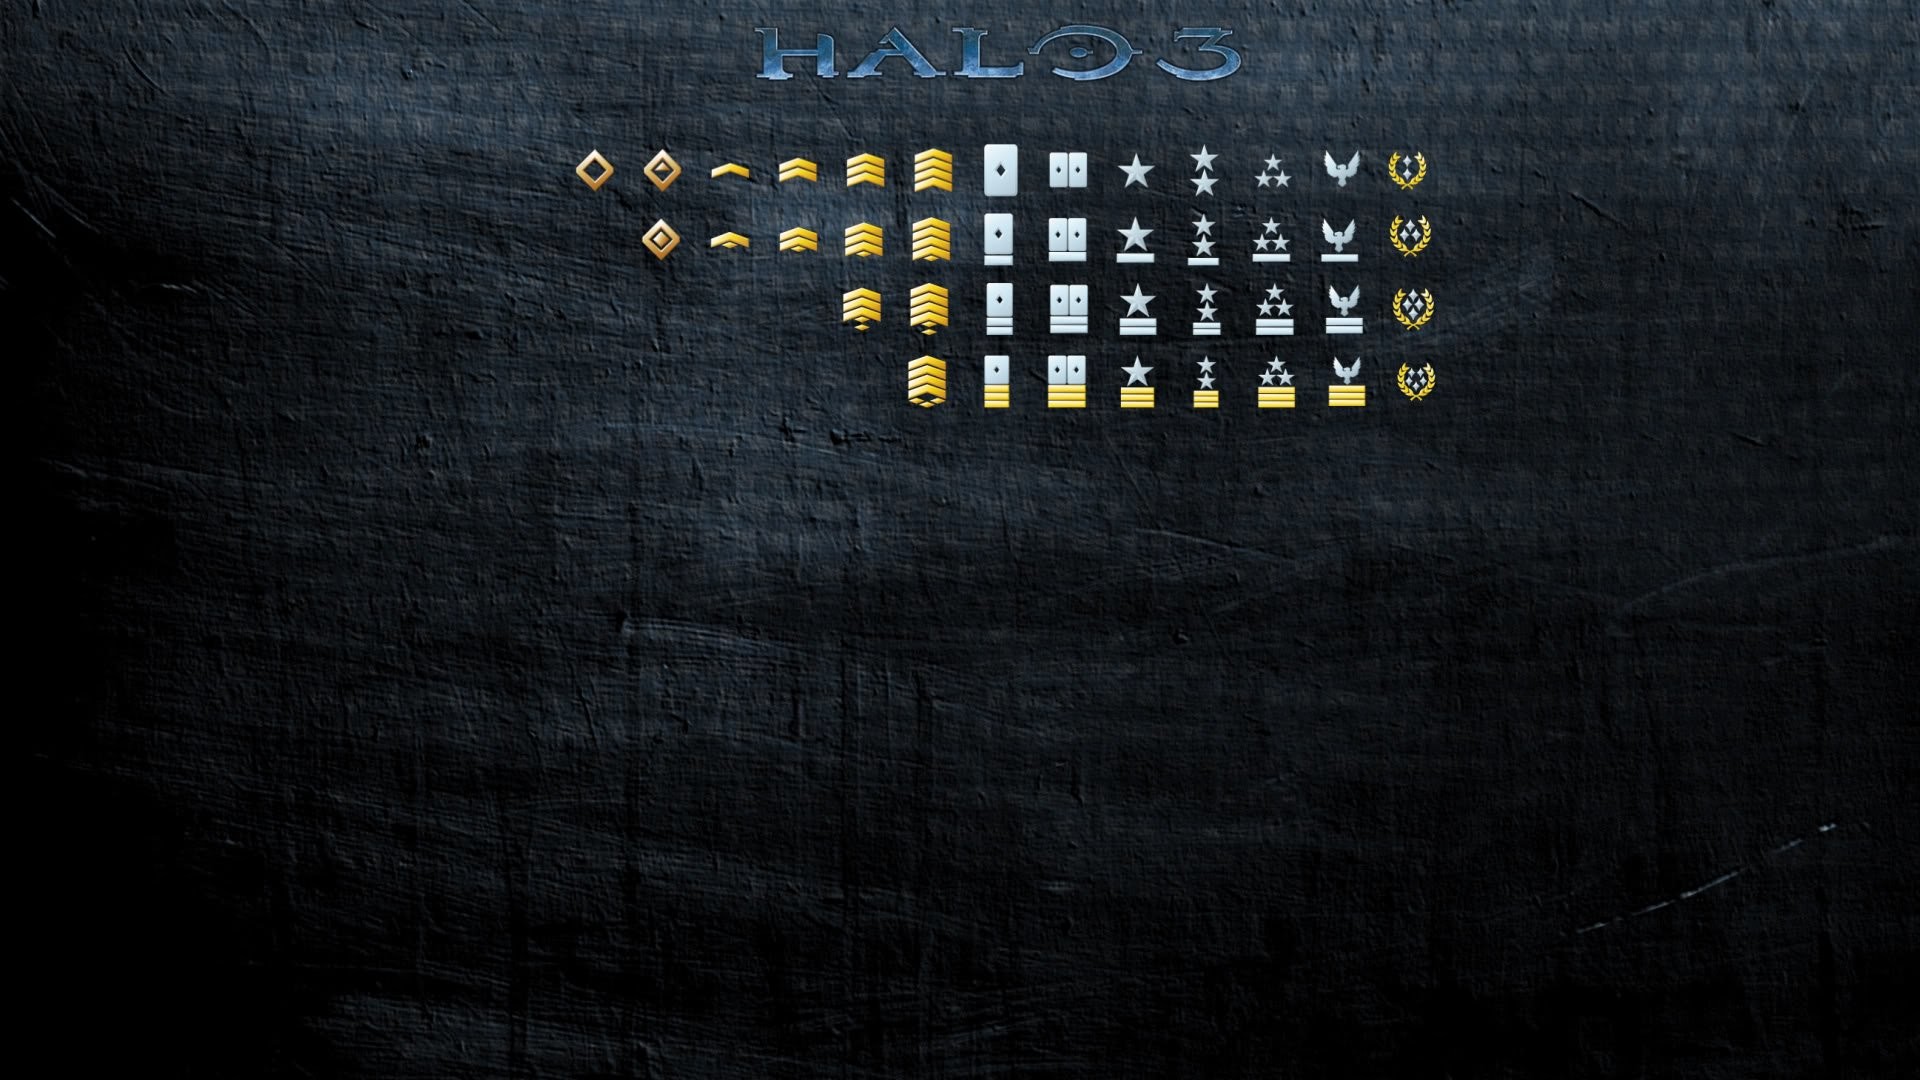 Csgo halo 3 ranks Halo 3 Ranks 143547